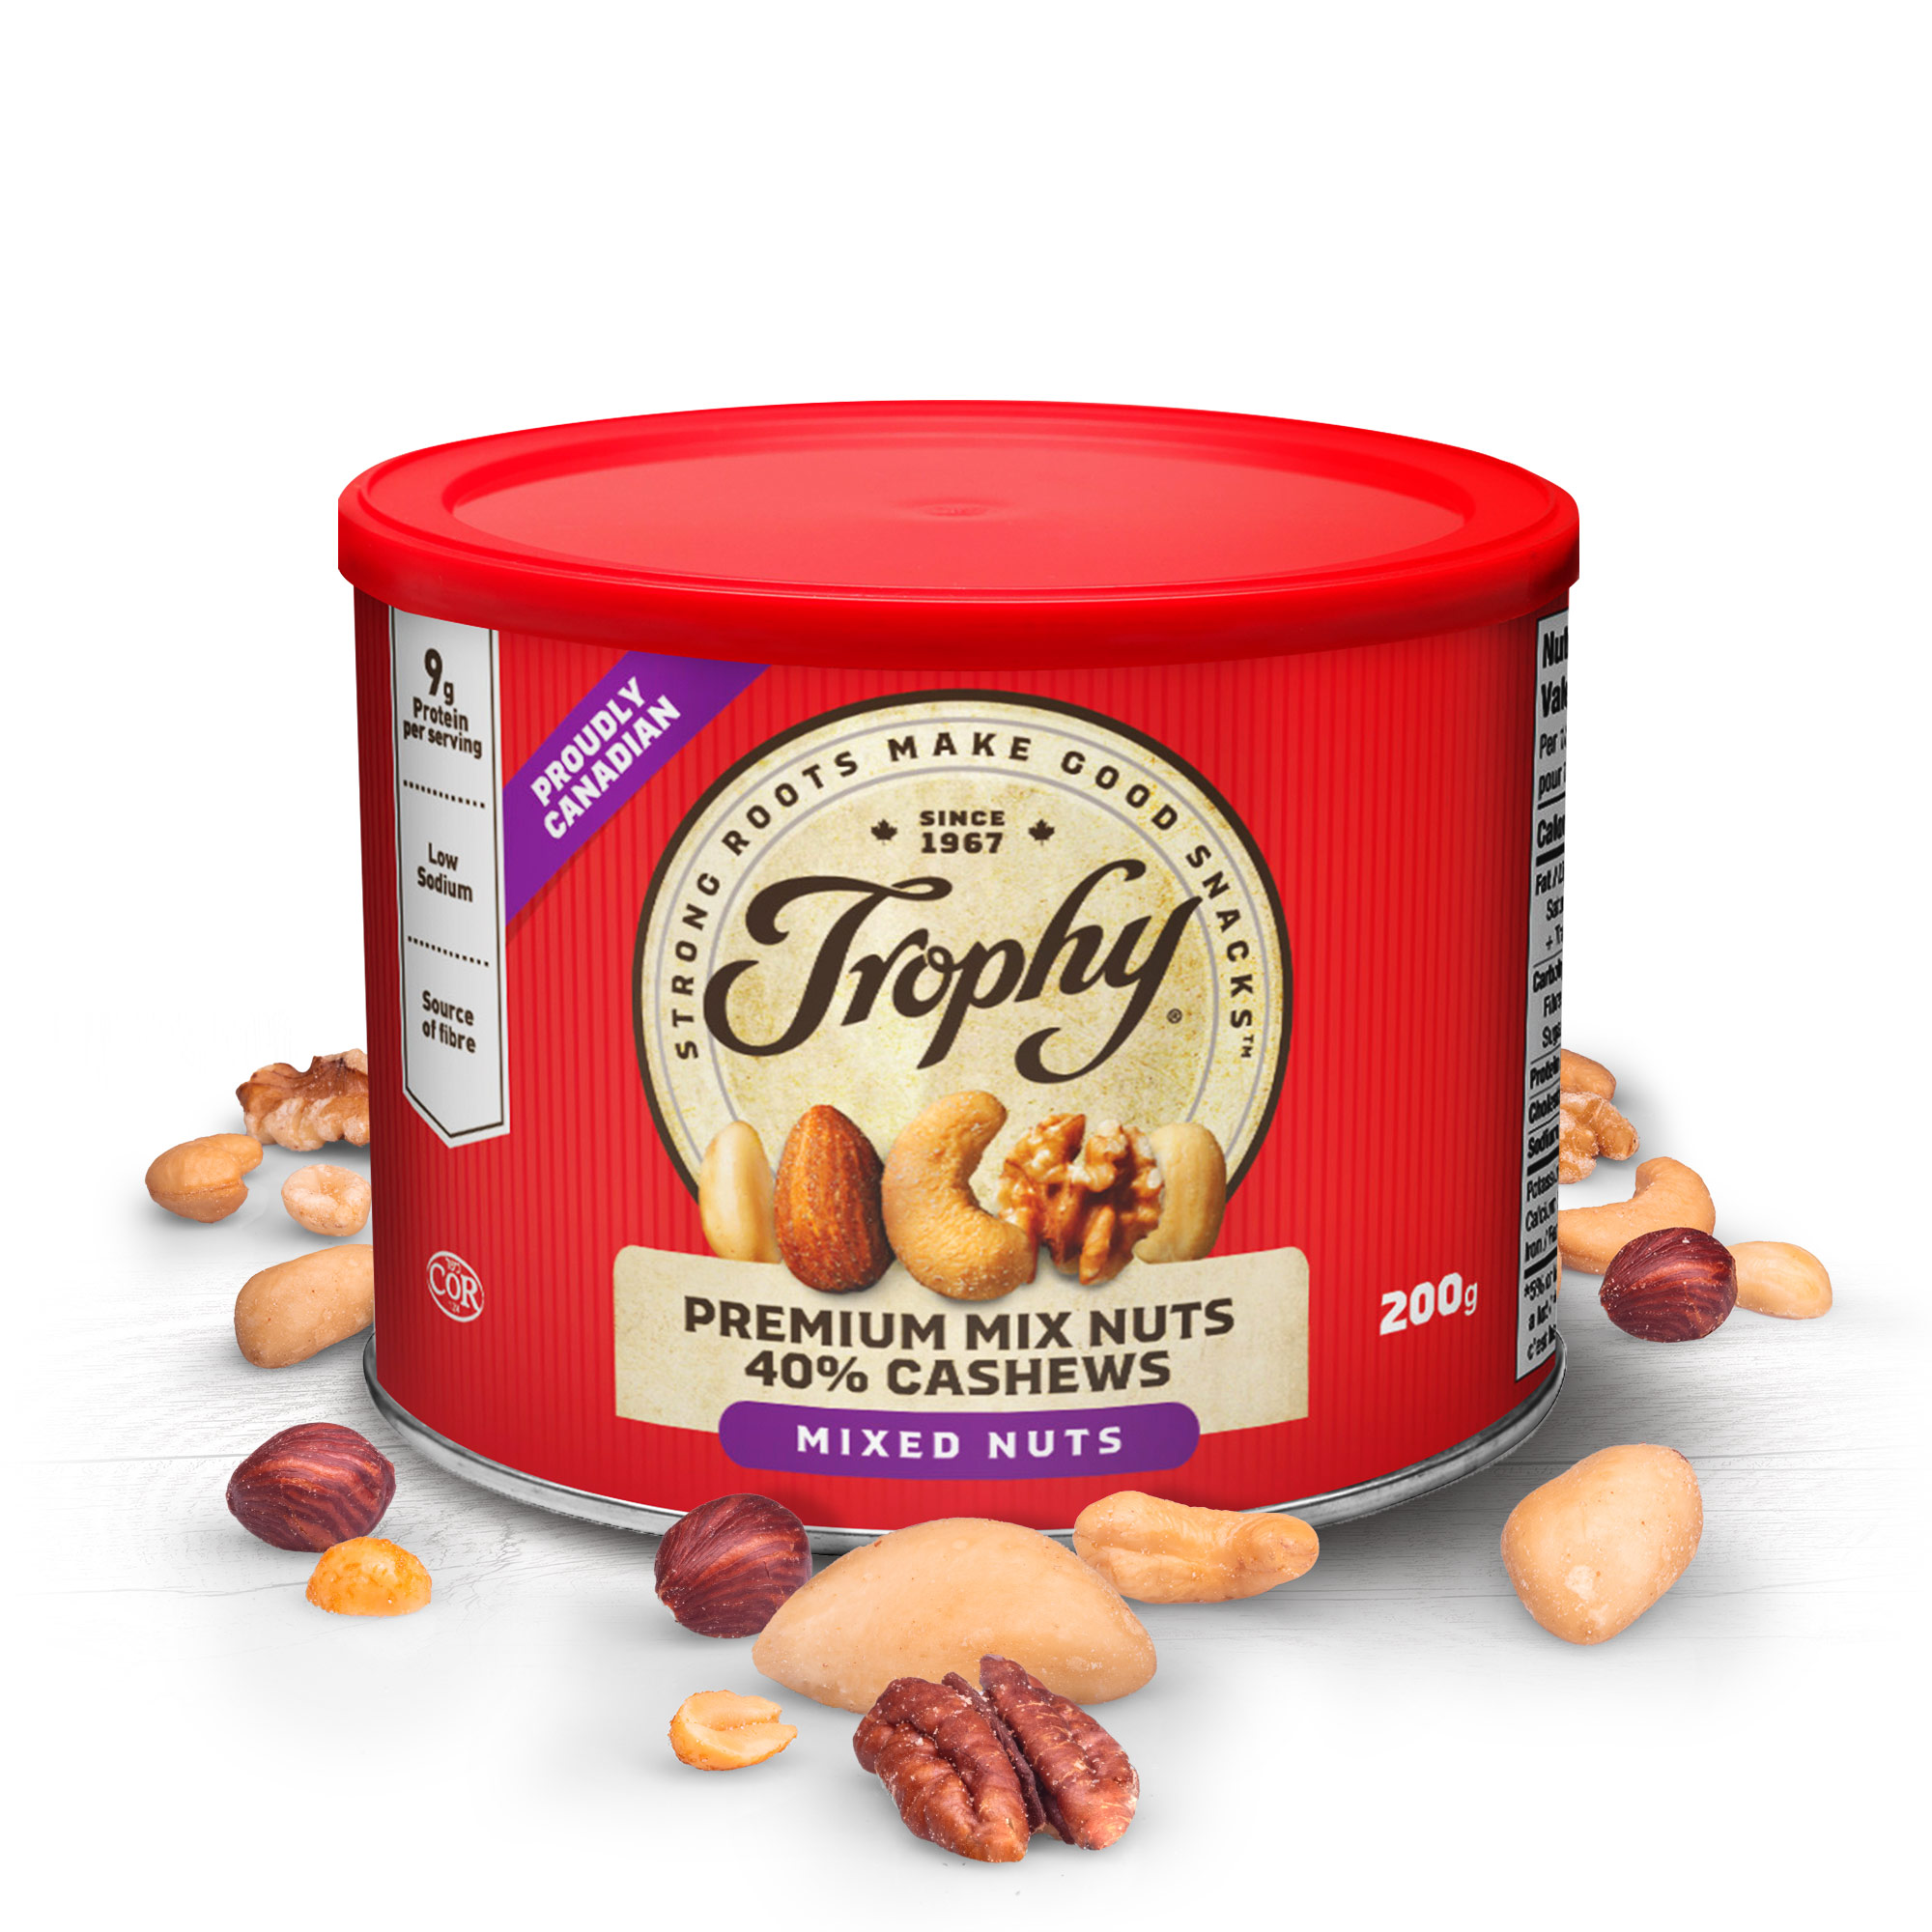 Premium Mix Nuts 40% Cashews